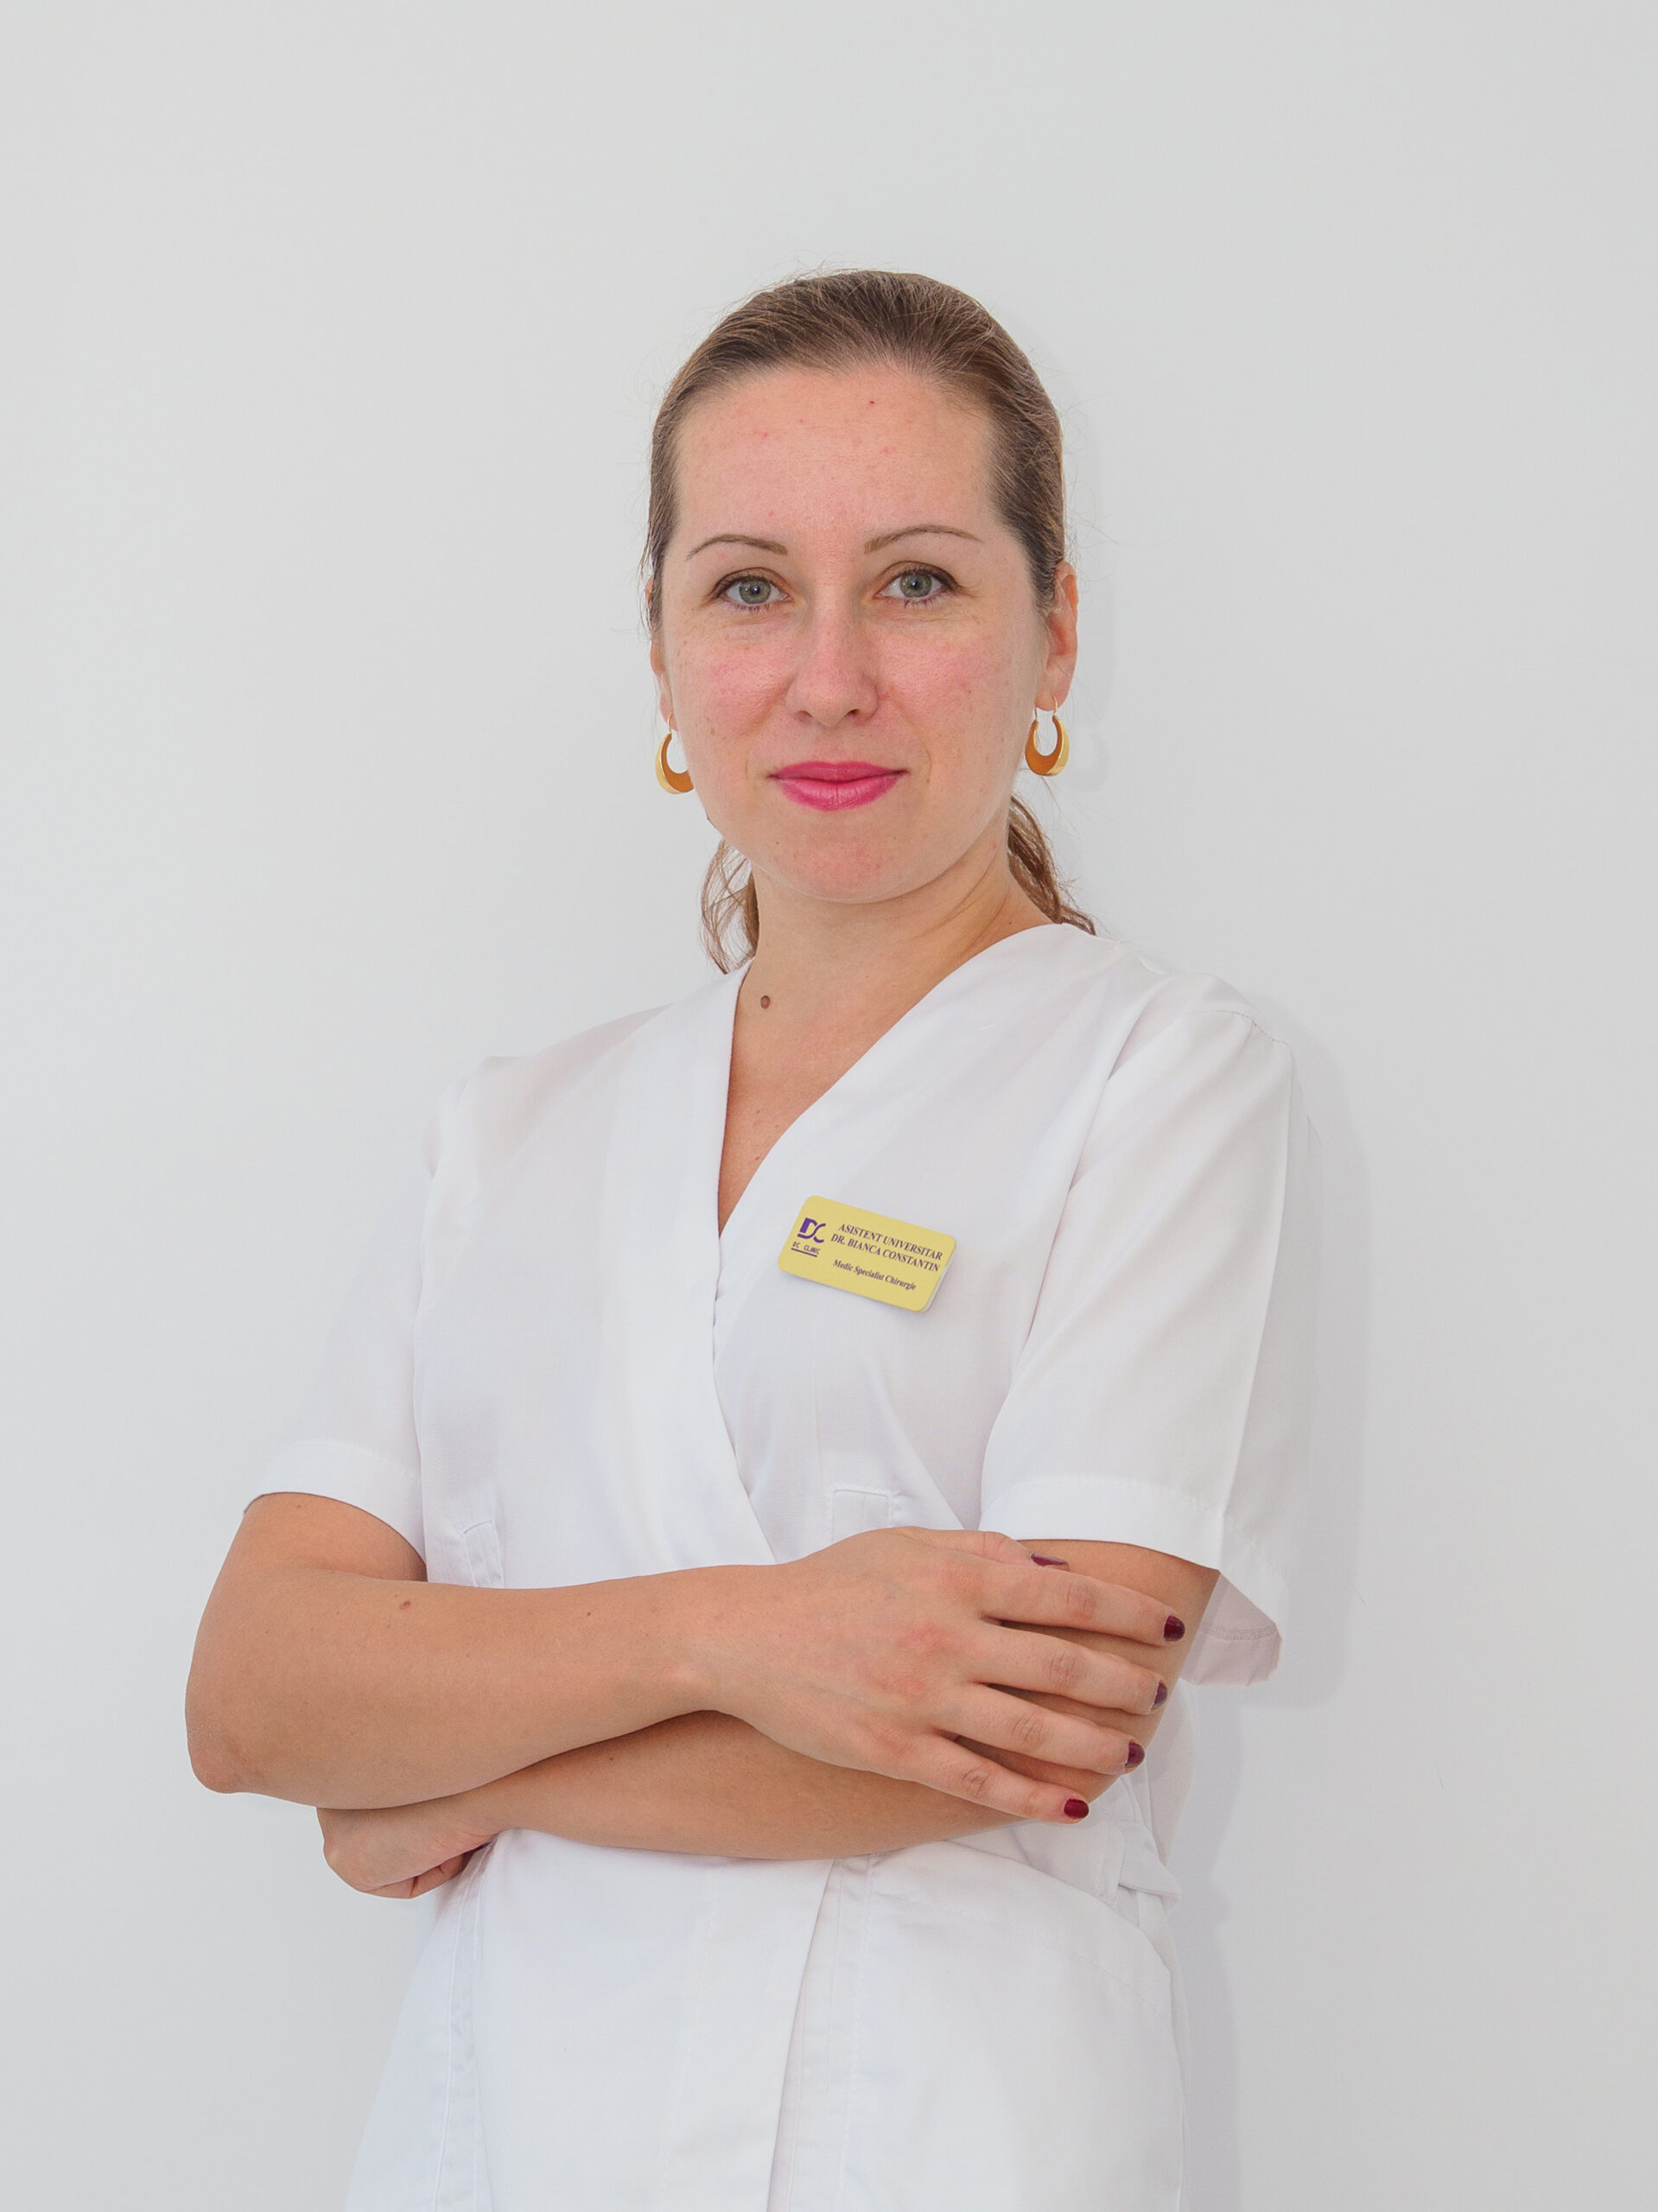 Șef lucr. dr. Bianca Georgiana Constantin